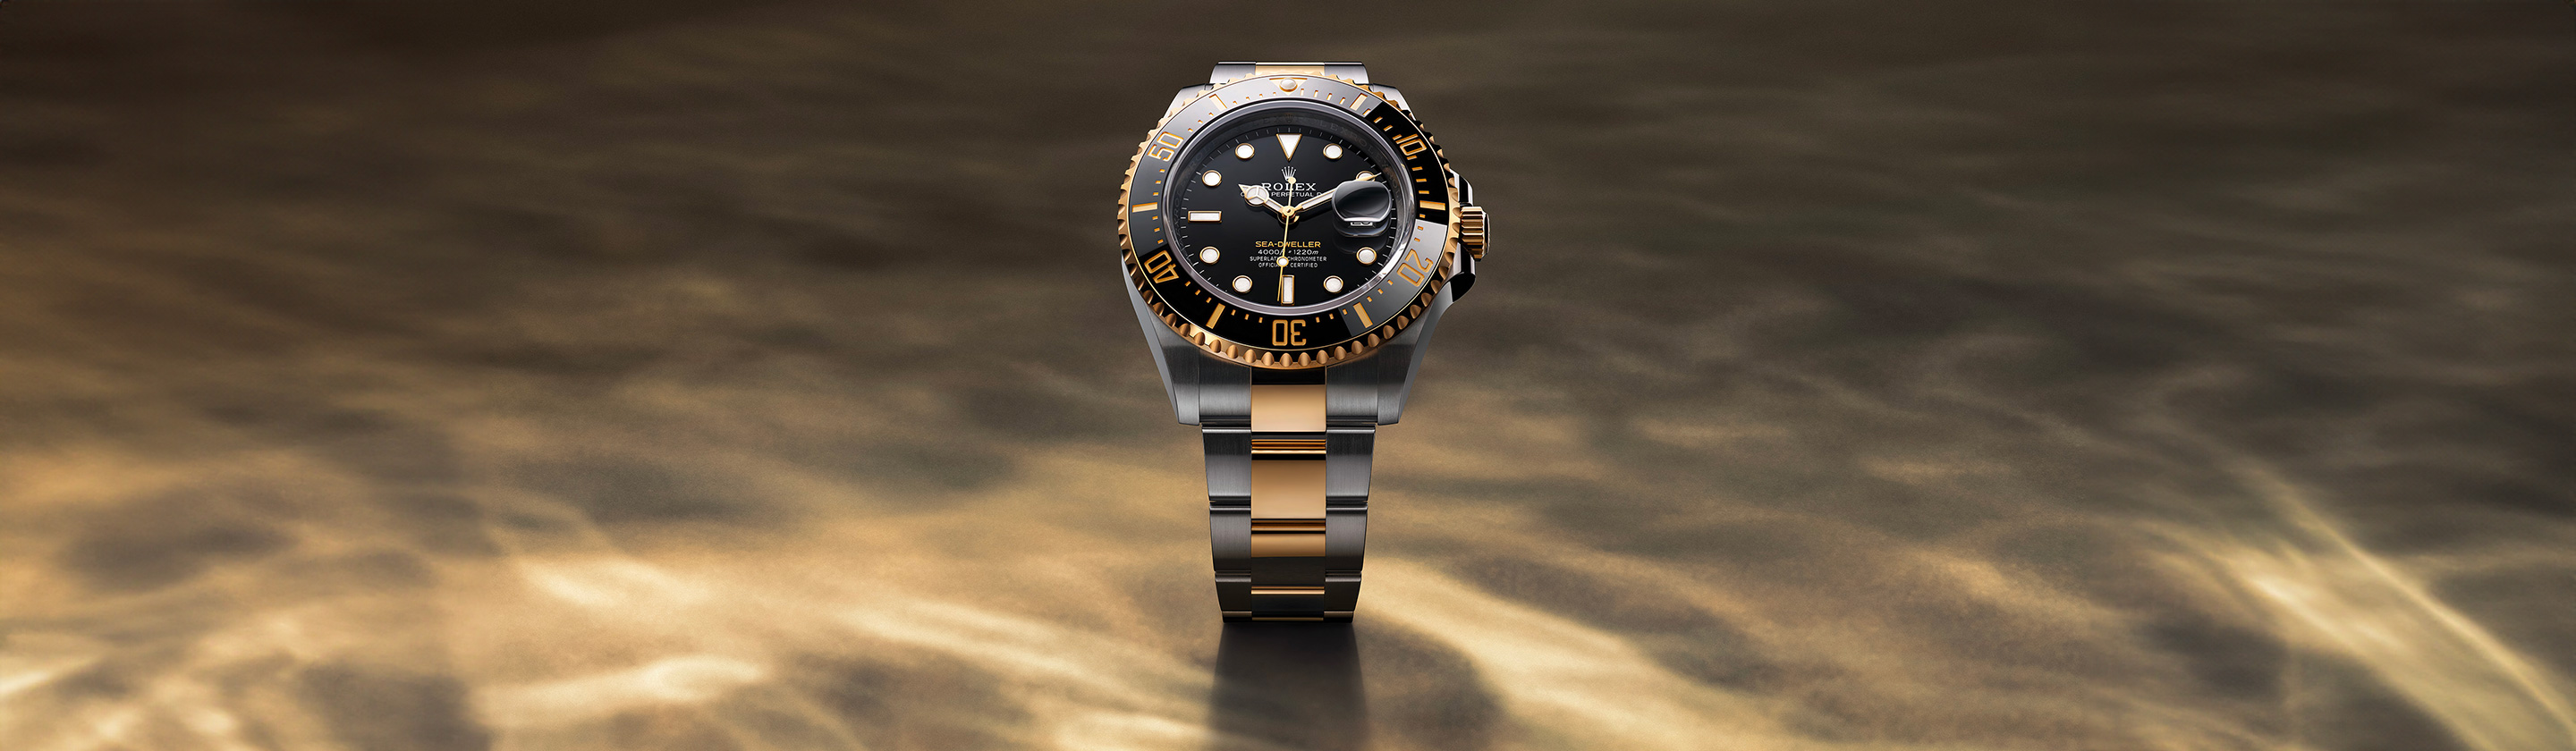 Rolex Sea-Dweller watches - Ethos